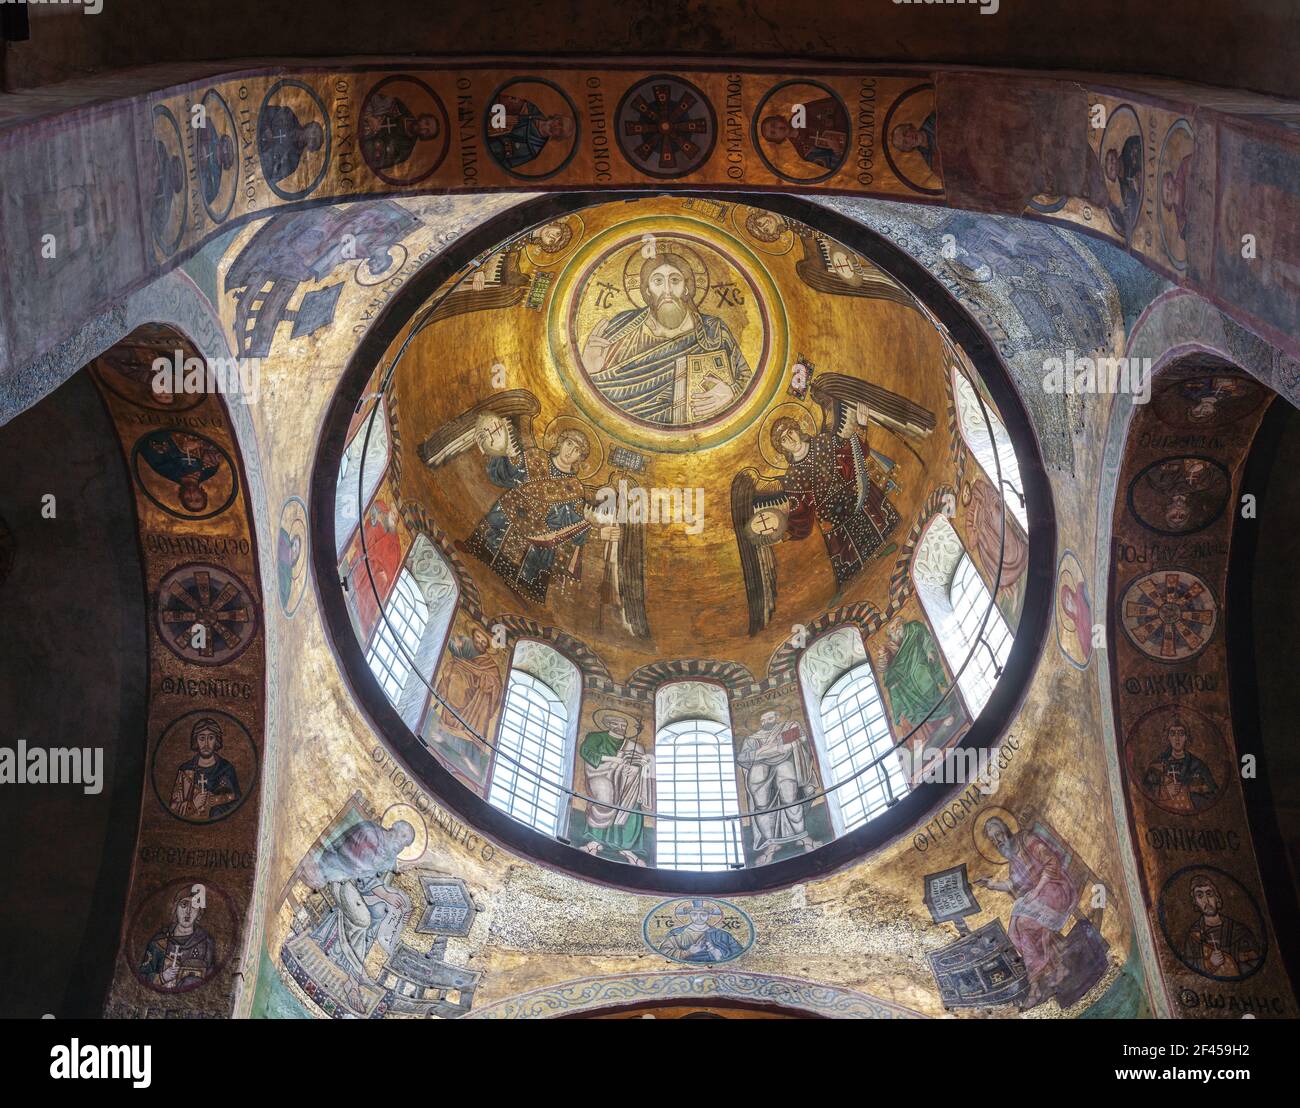 Dome ceiling at Saint Sophia Cathedral interior - Kiev, Ukraine Stock Photo